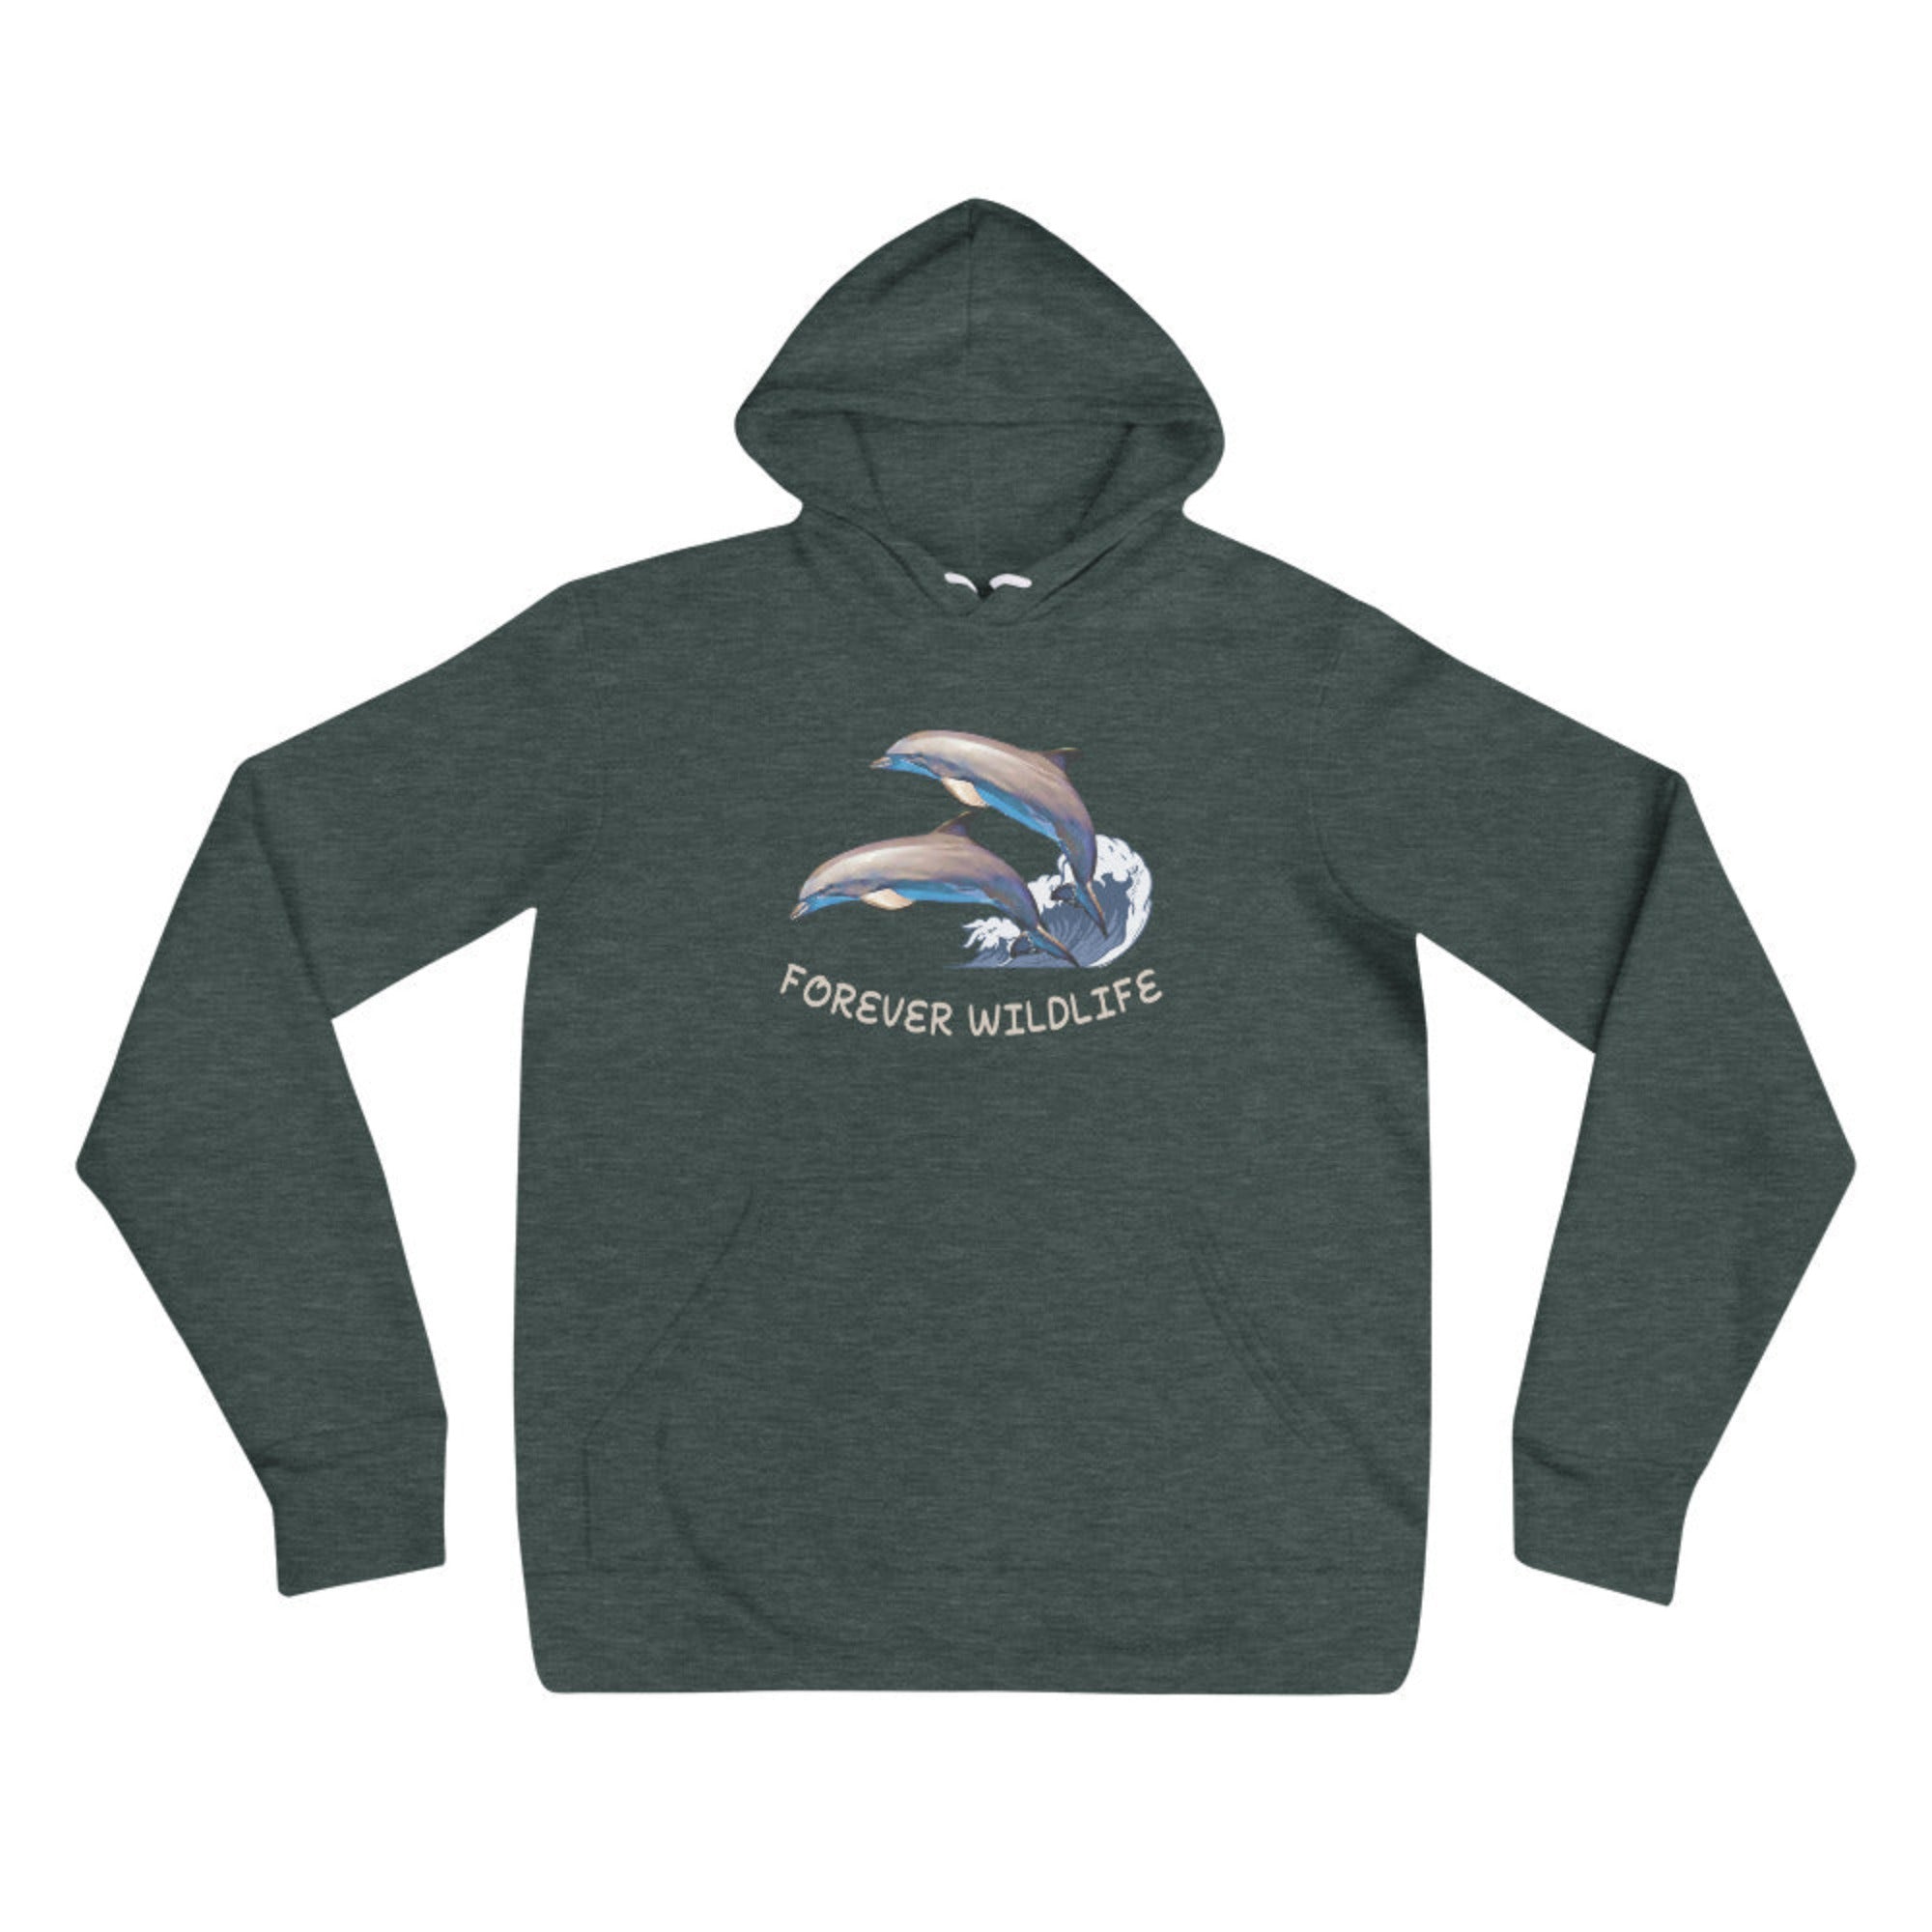 Dolphin Hoodie in Heather Forest – Premium Wildlife Animal Inspirational Hoodie Design, part of Wildlife Hoodies & Clothing from Forever Wildlife